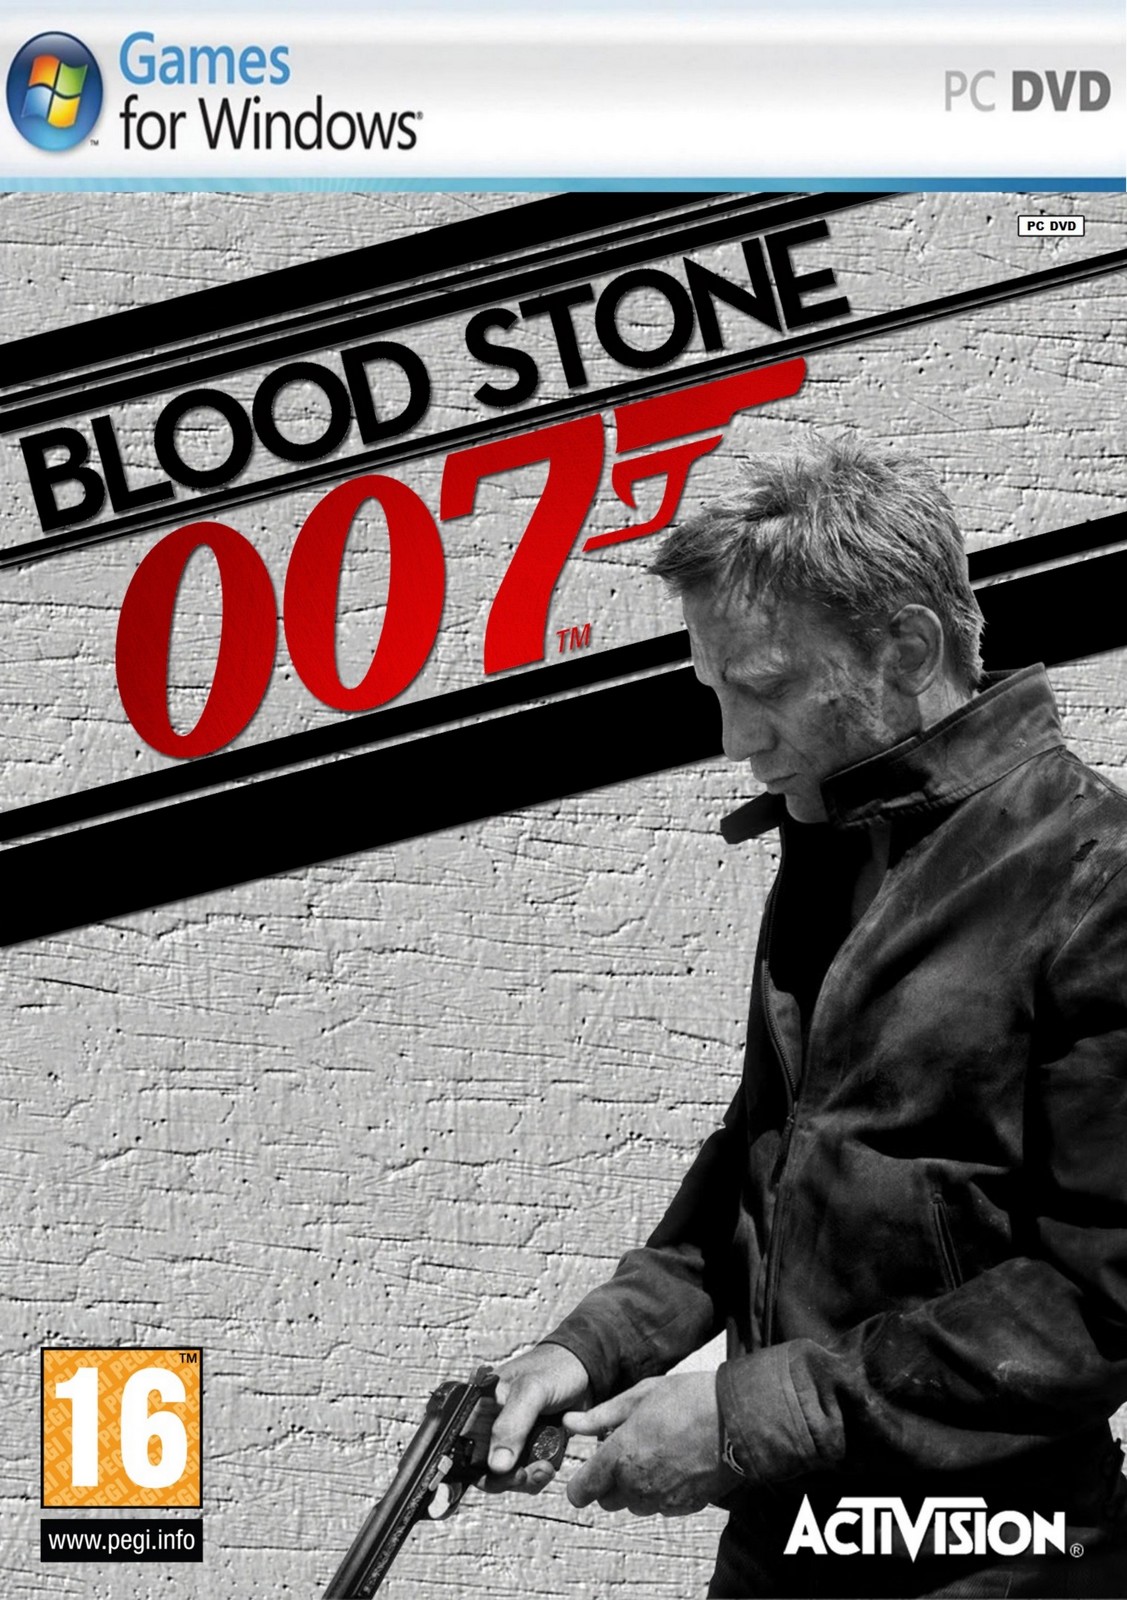 Filmovízia: 007 James Bond - Blood Stone